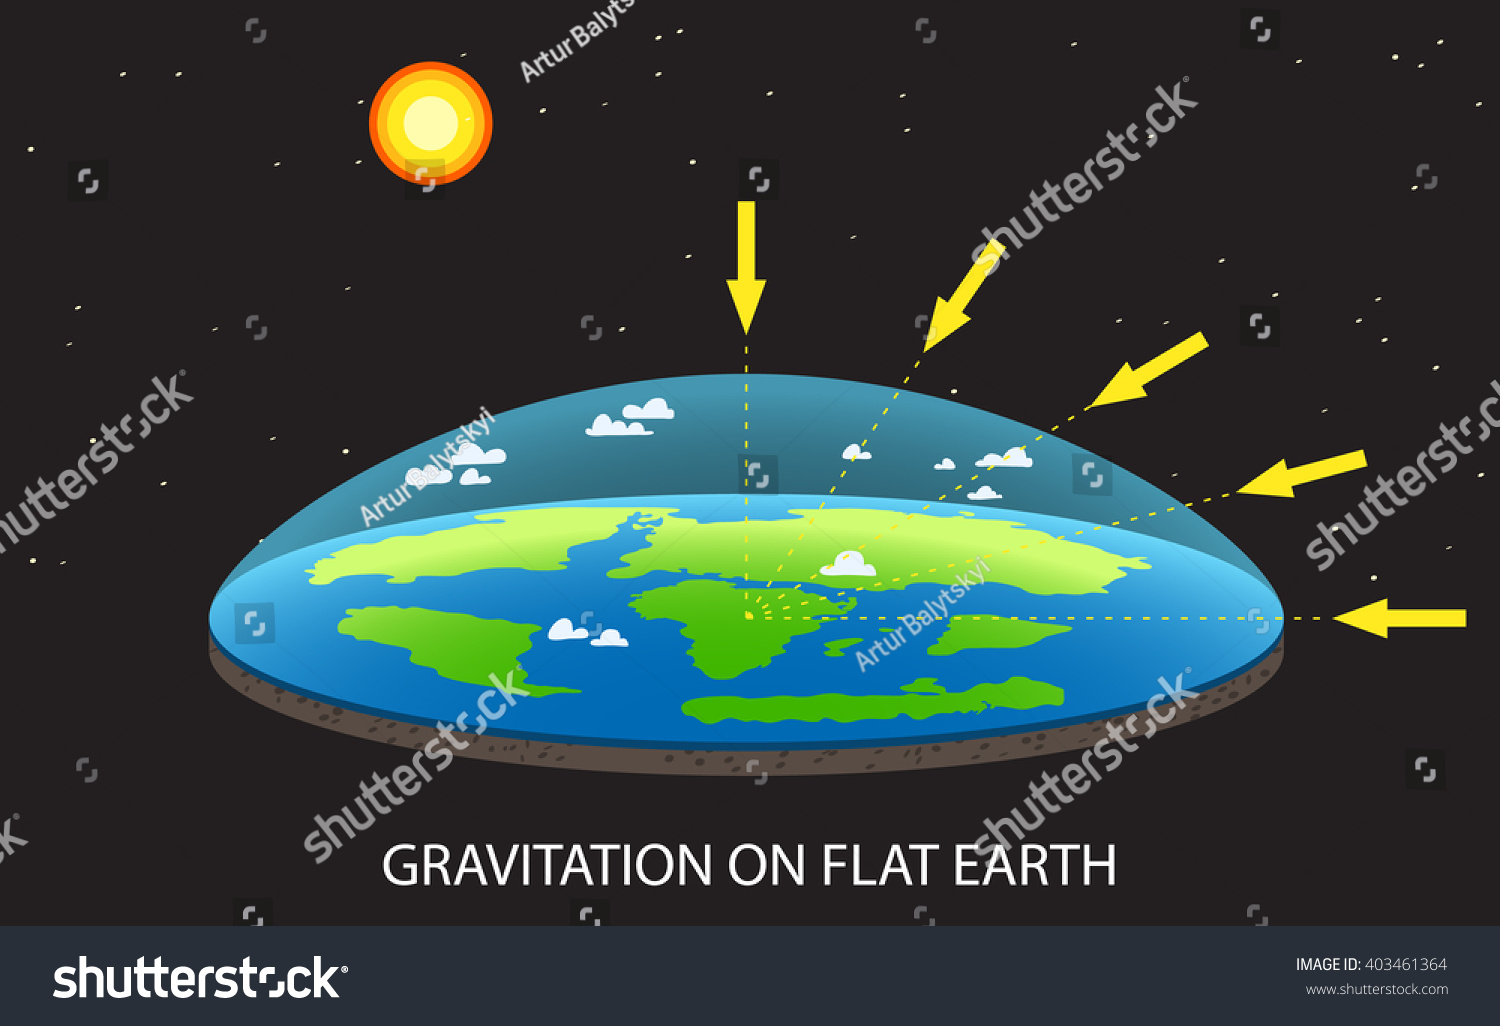 flat earth gravity